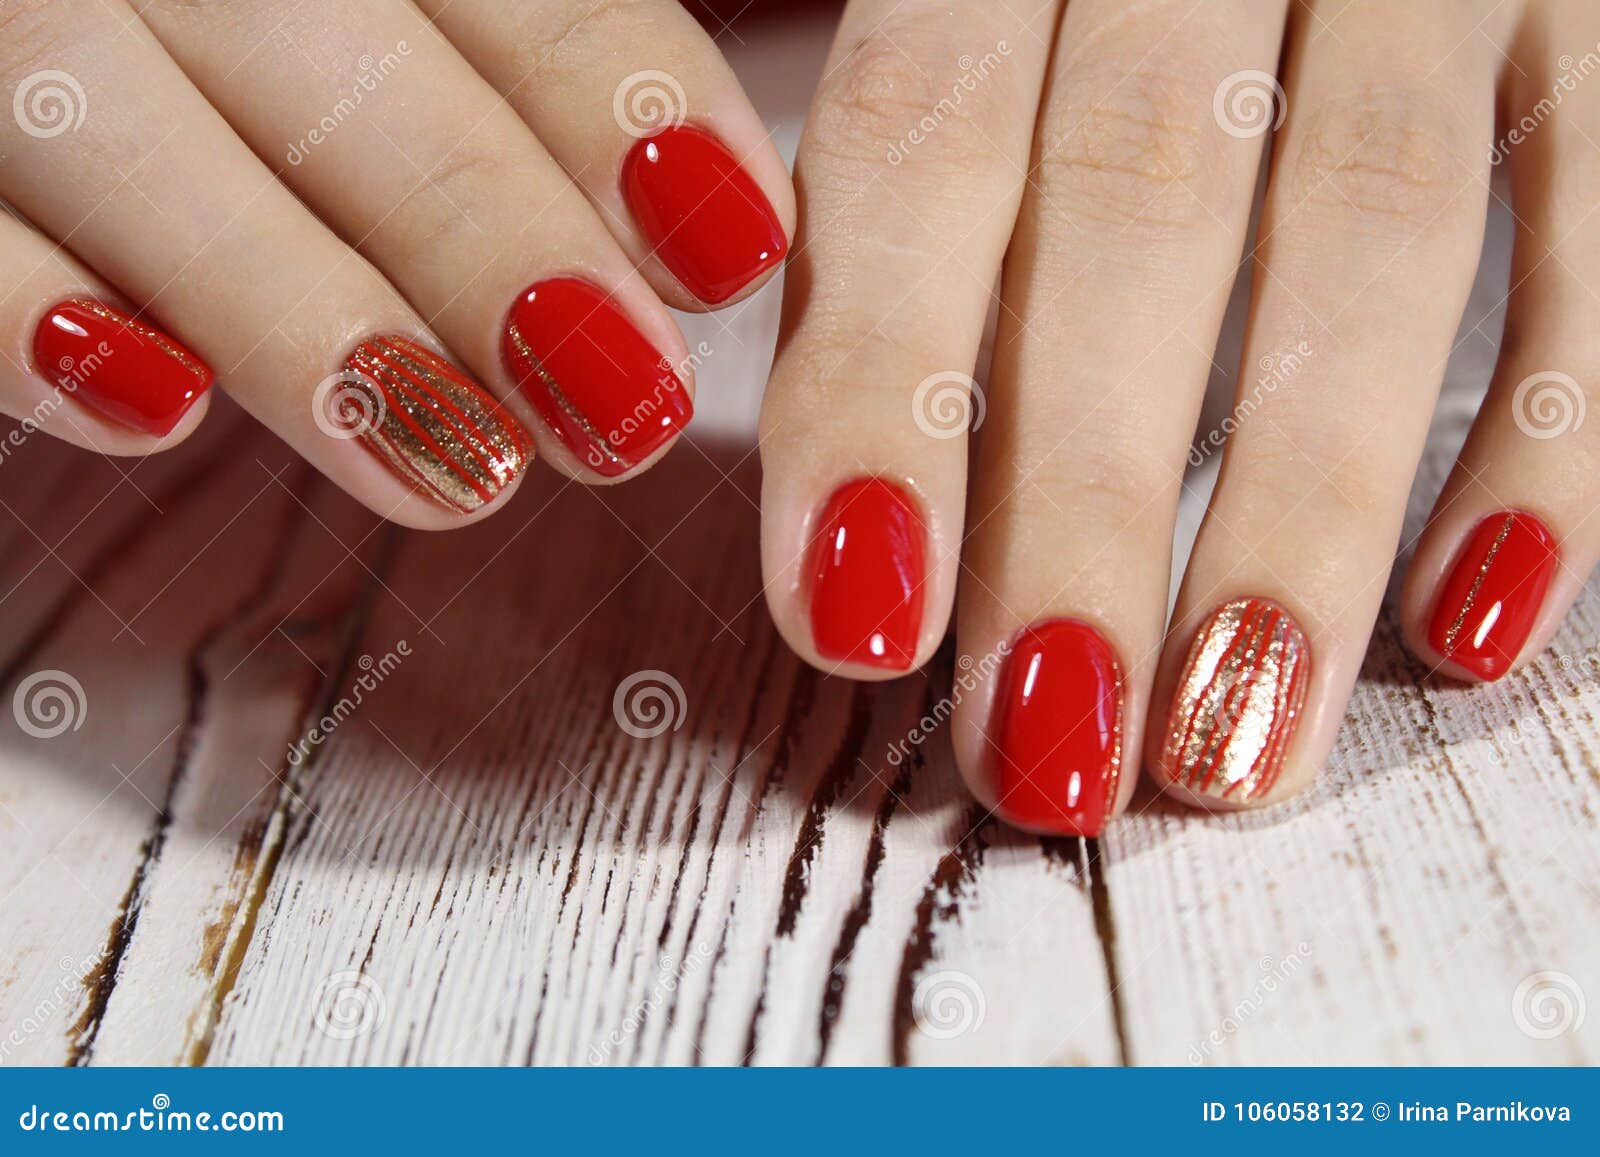 Manicured Nails Nail Polish Art Design. Stock Photo - Image of woman ...